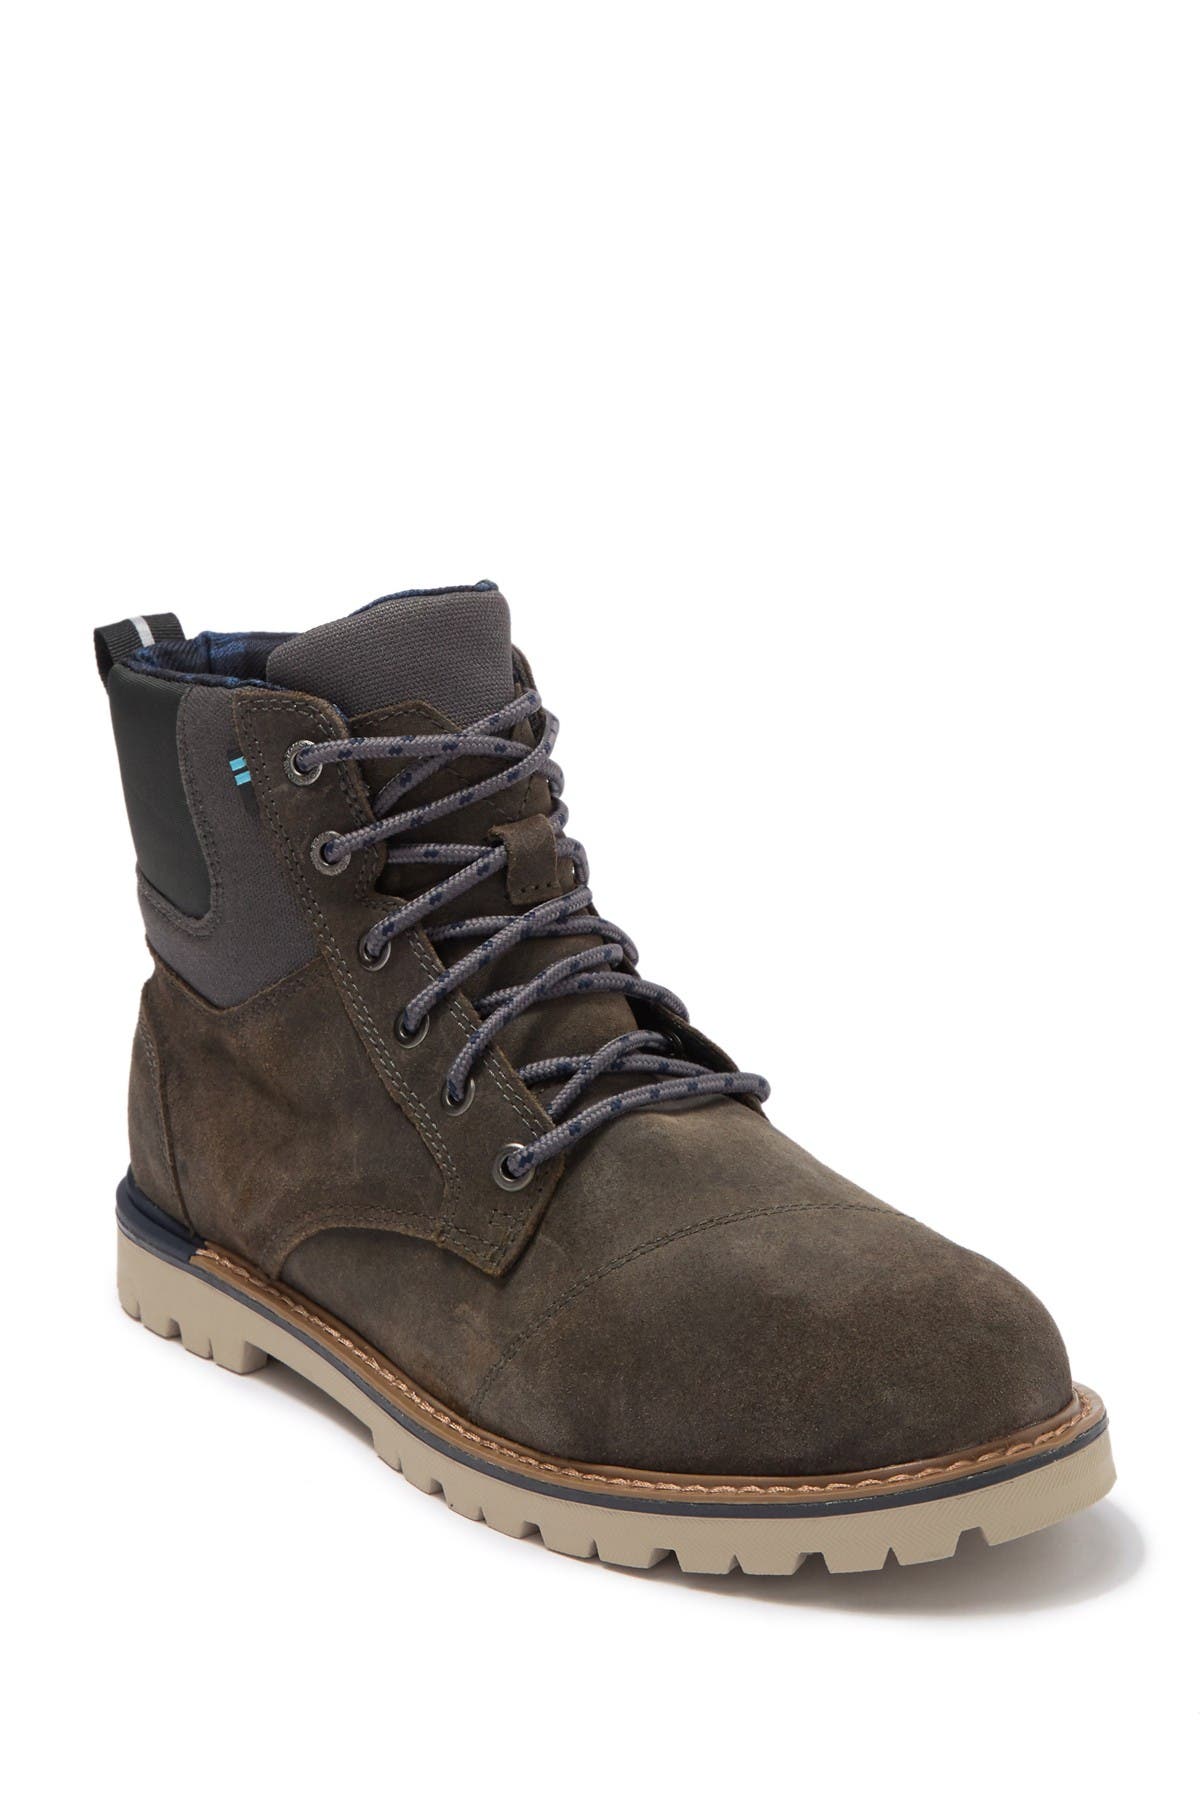 toms ashland waterproof boots